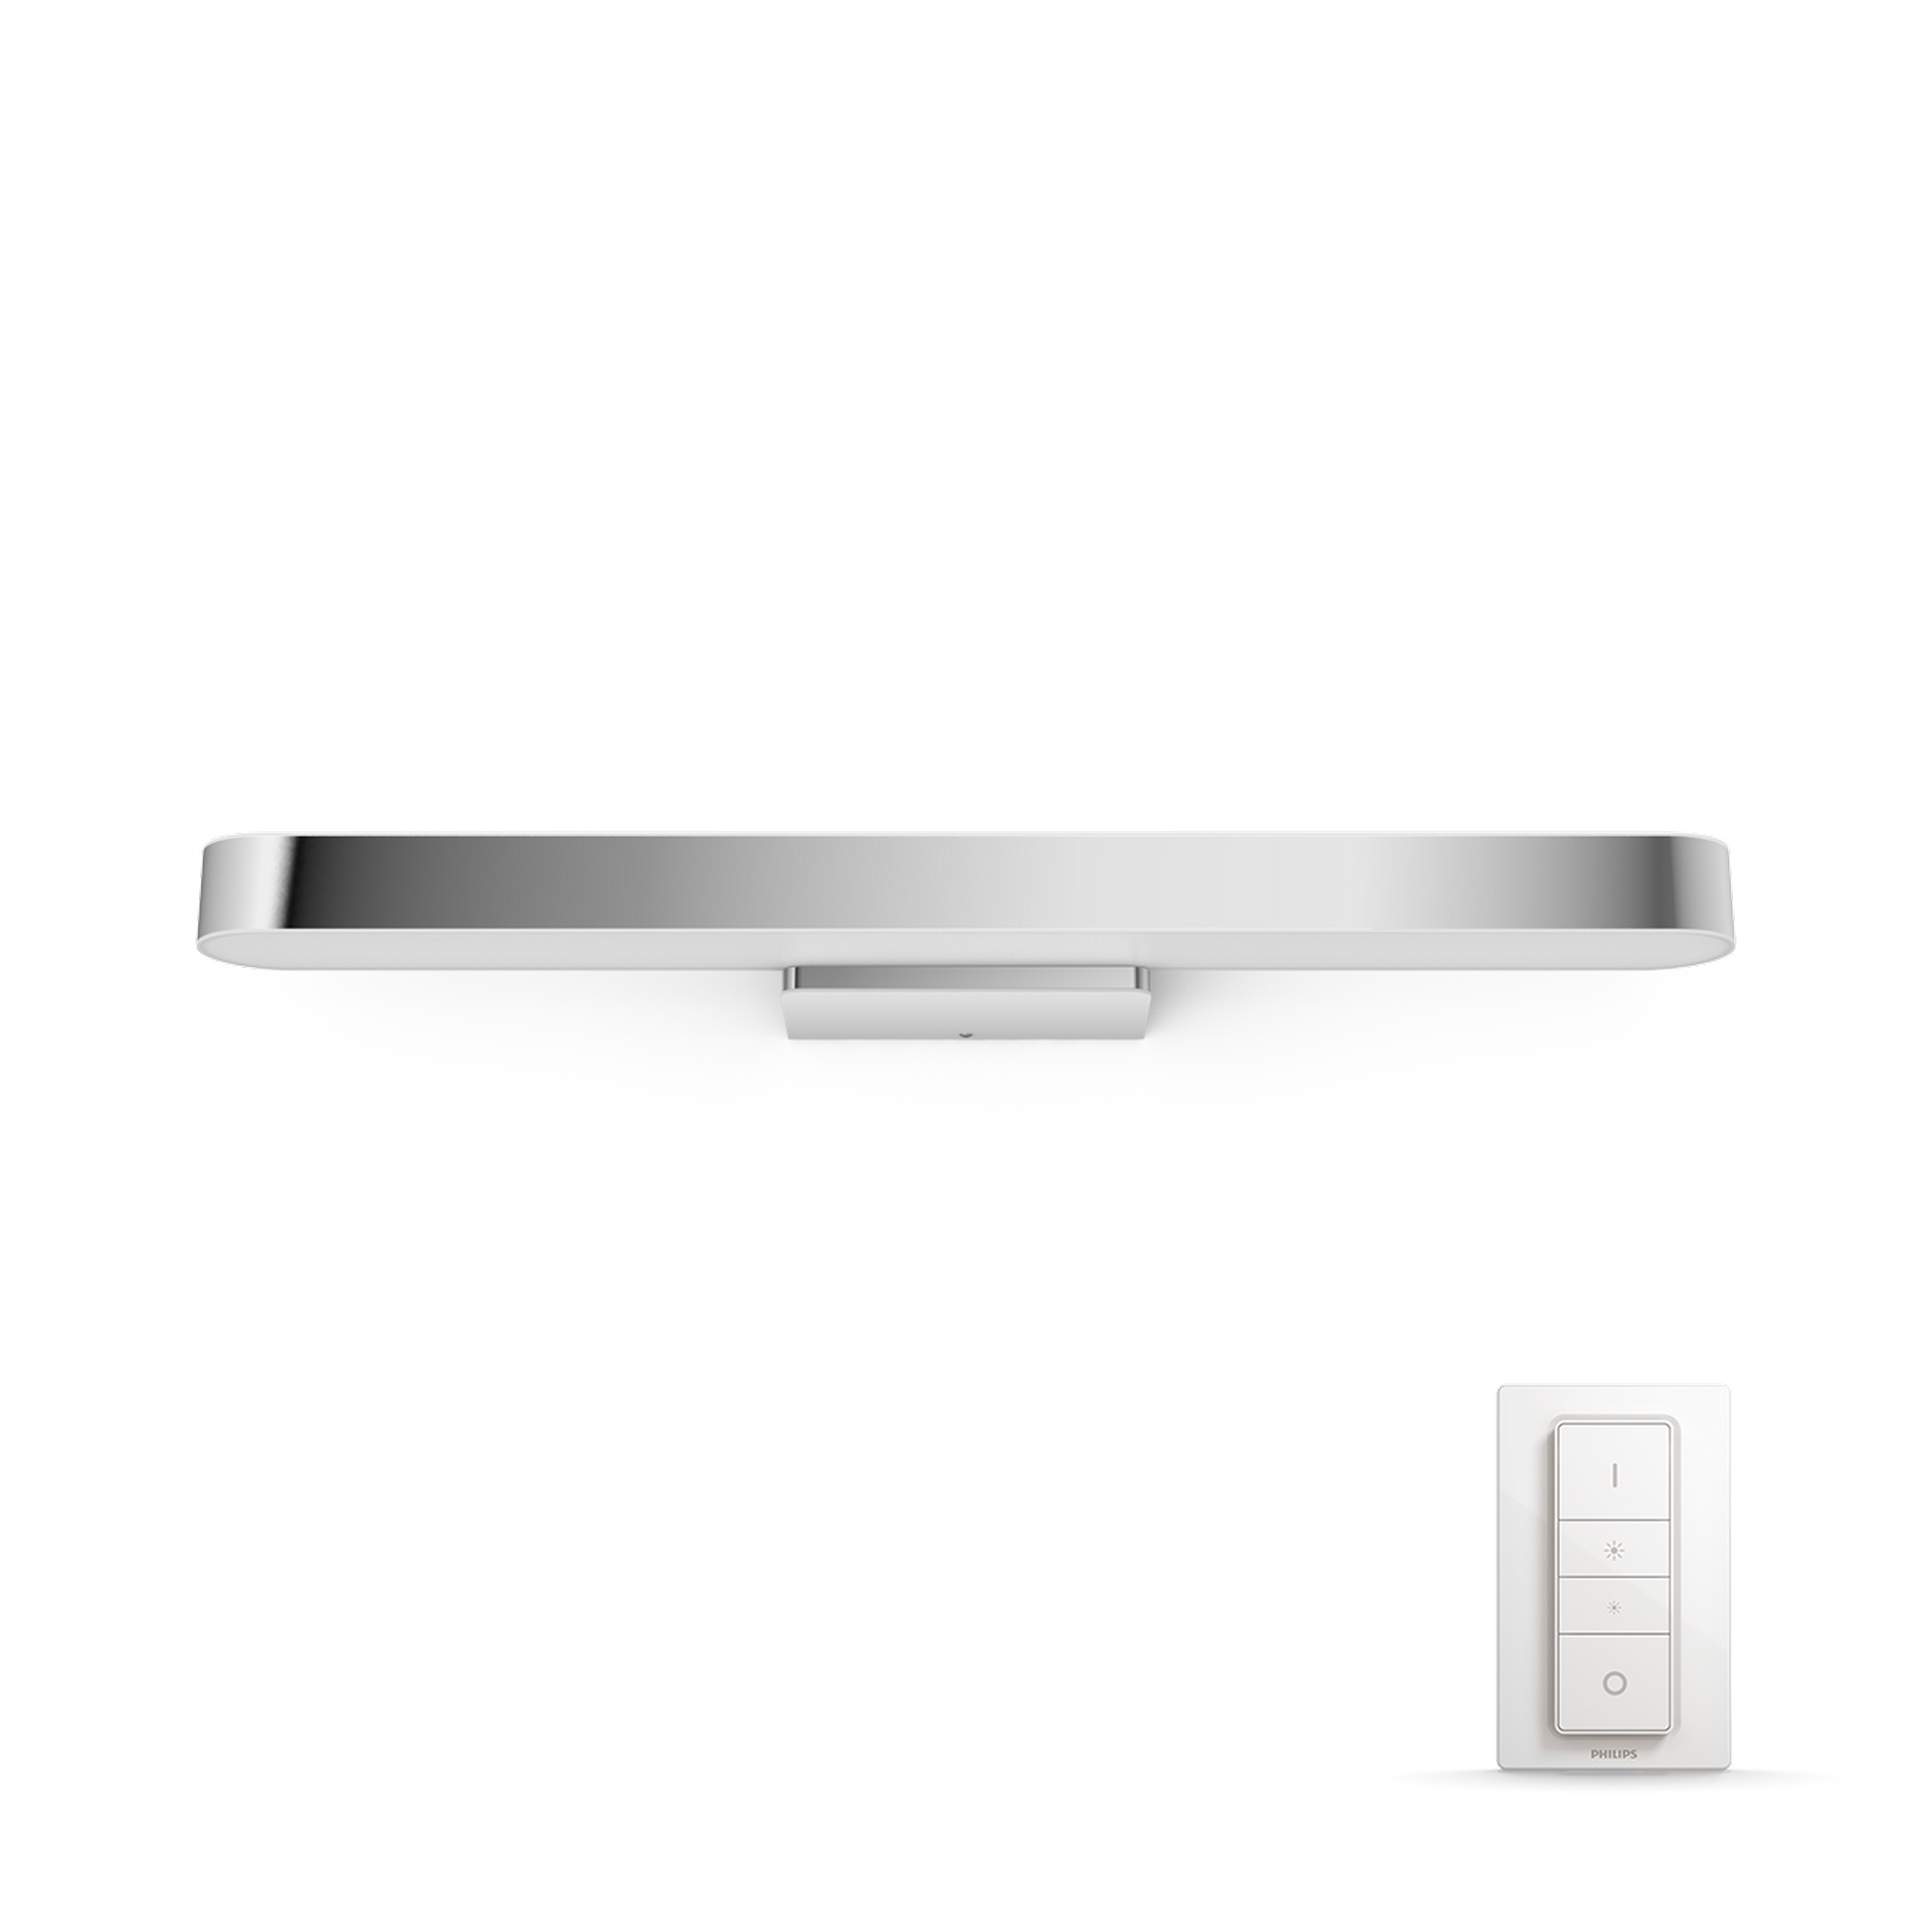 LED-Wandleuchte "Hue" für den Spiegel Adore 3435111P7 White Ambiance inkl. Dimmschalter chrom + product picture